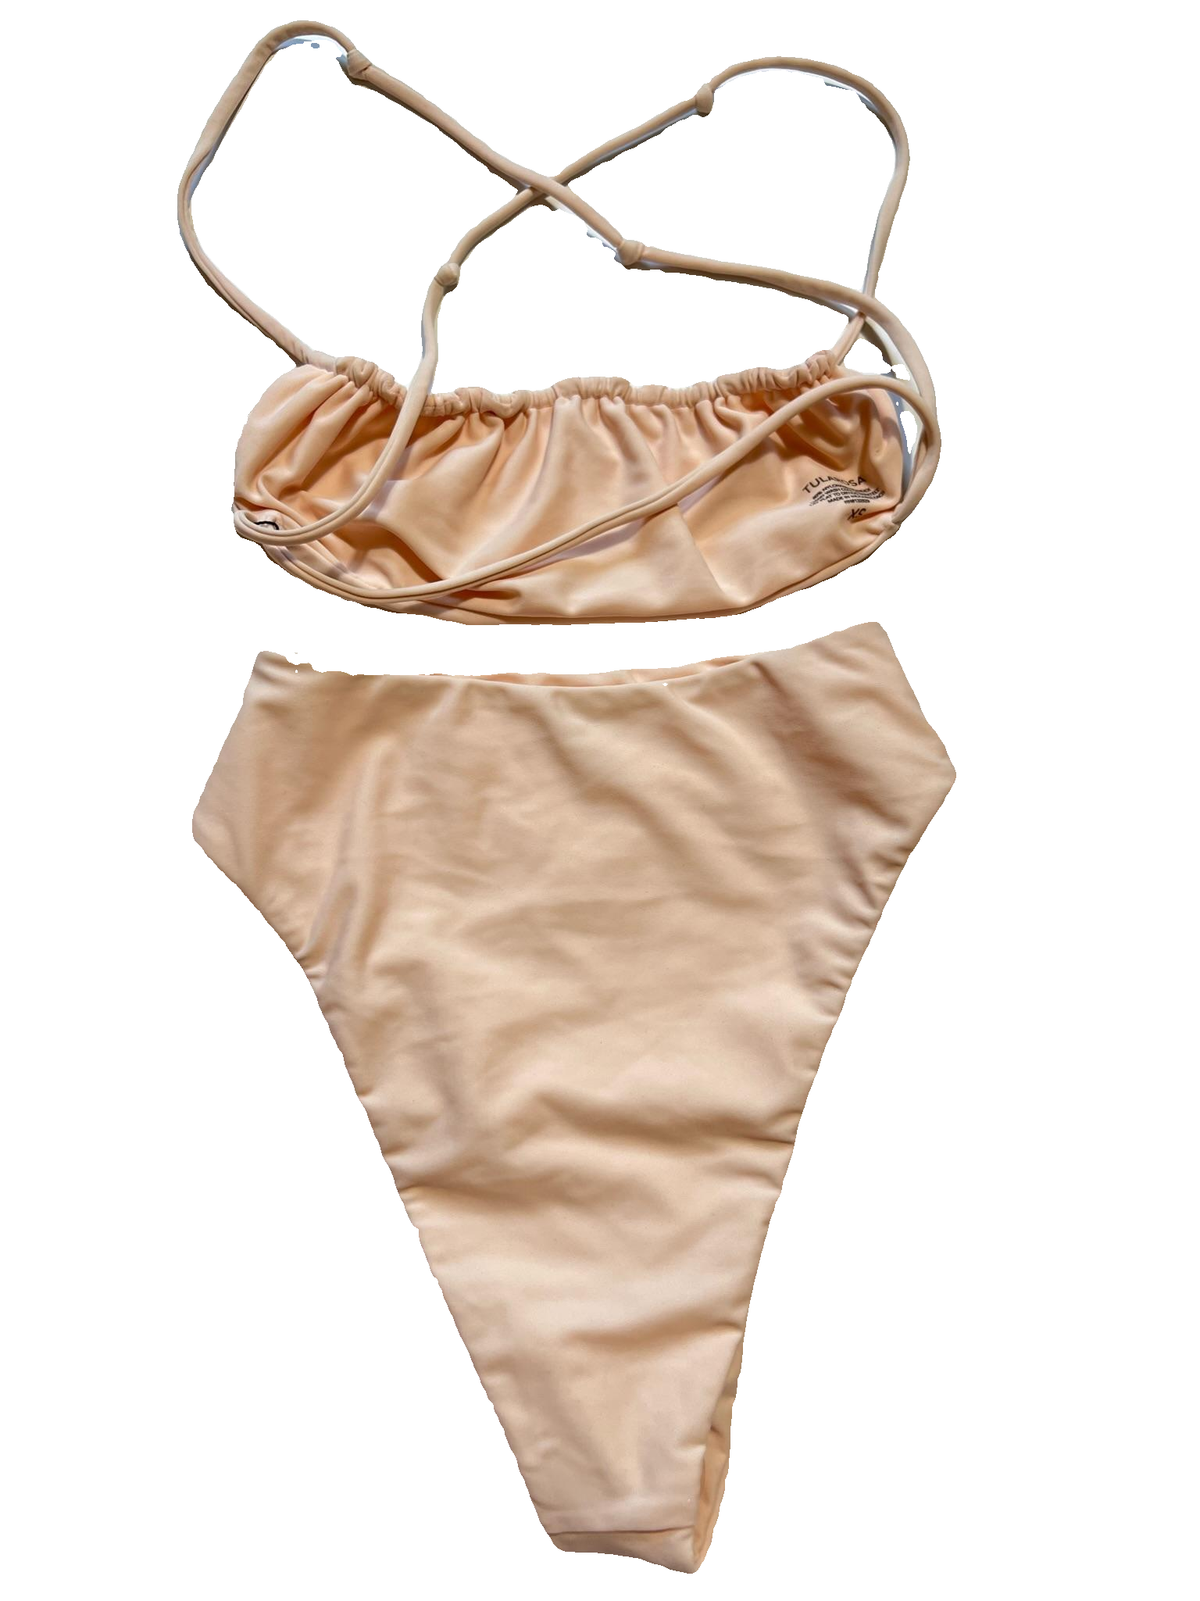 Tularosa - Light Pink Bikini Set - NEW WITH TAGS